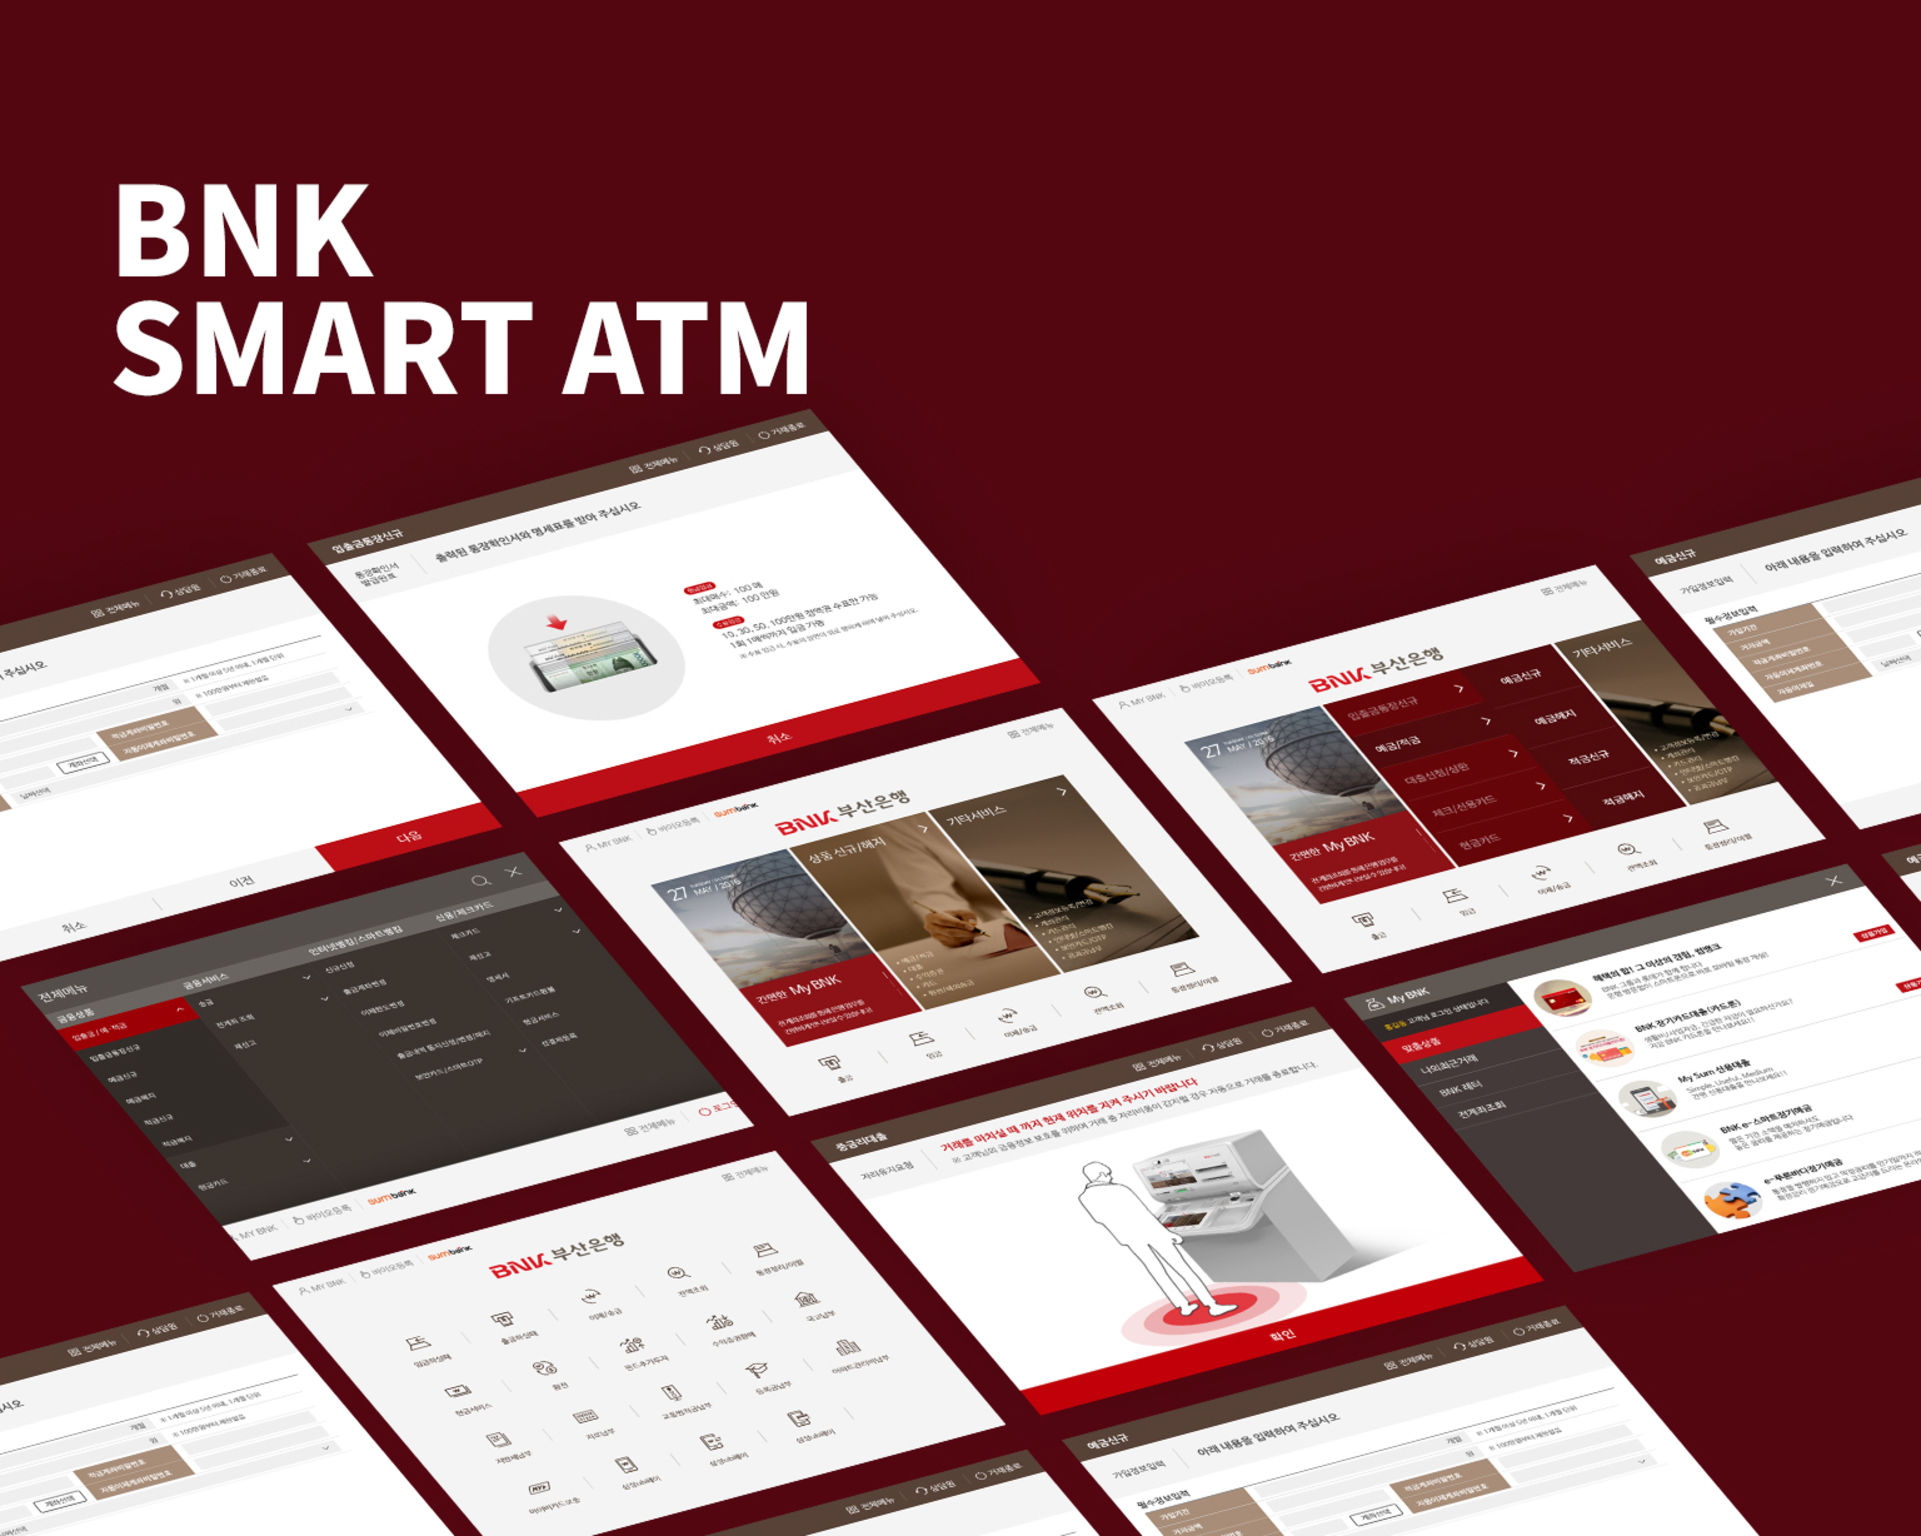 Digital Self Bank ATM